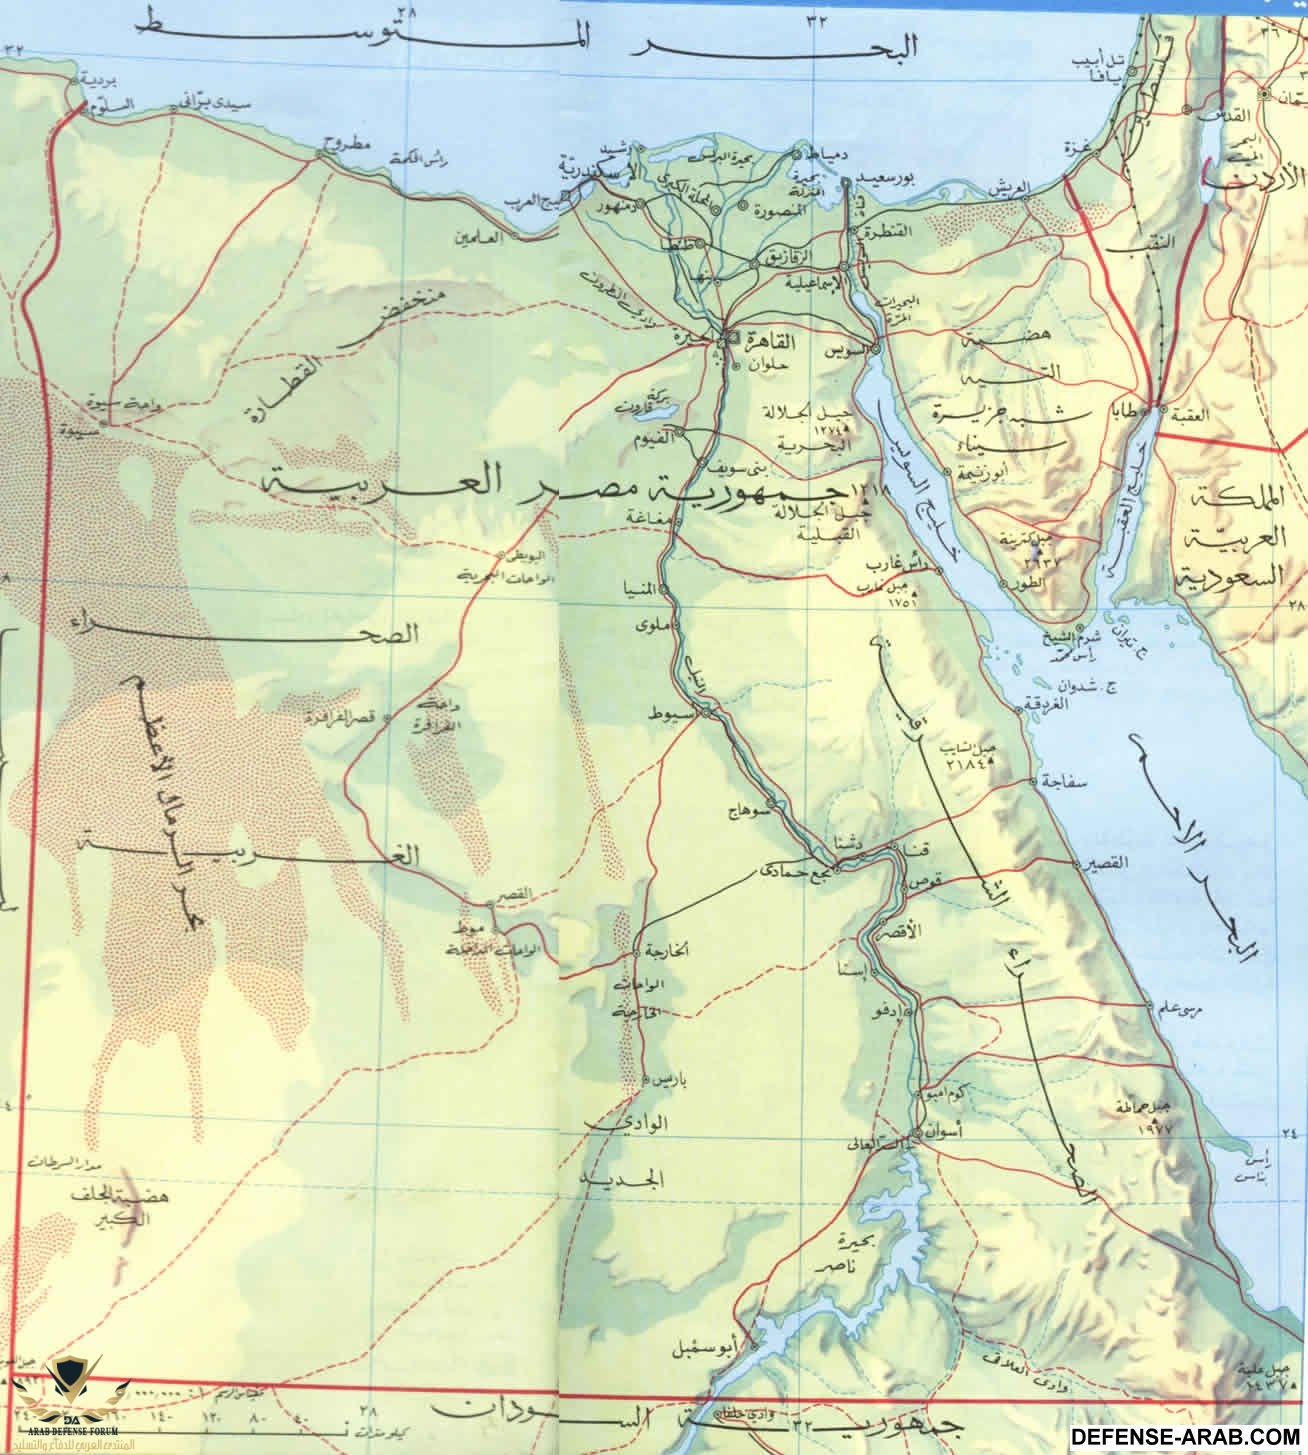 egypt_map_large.jpg